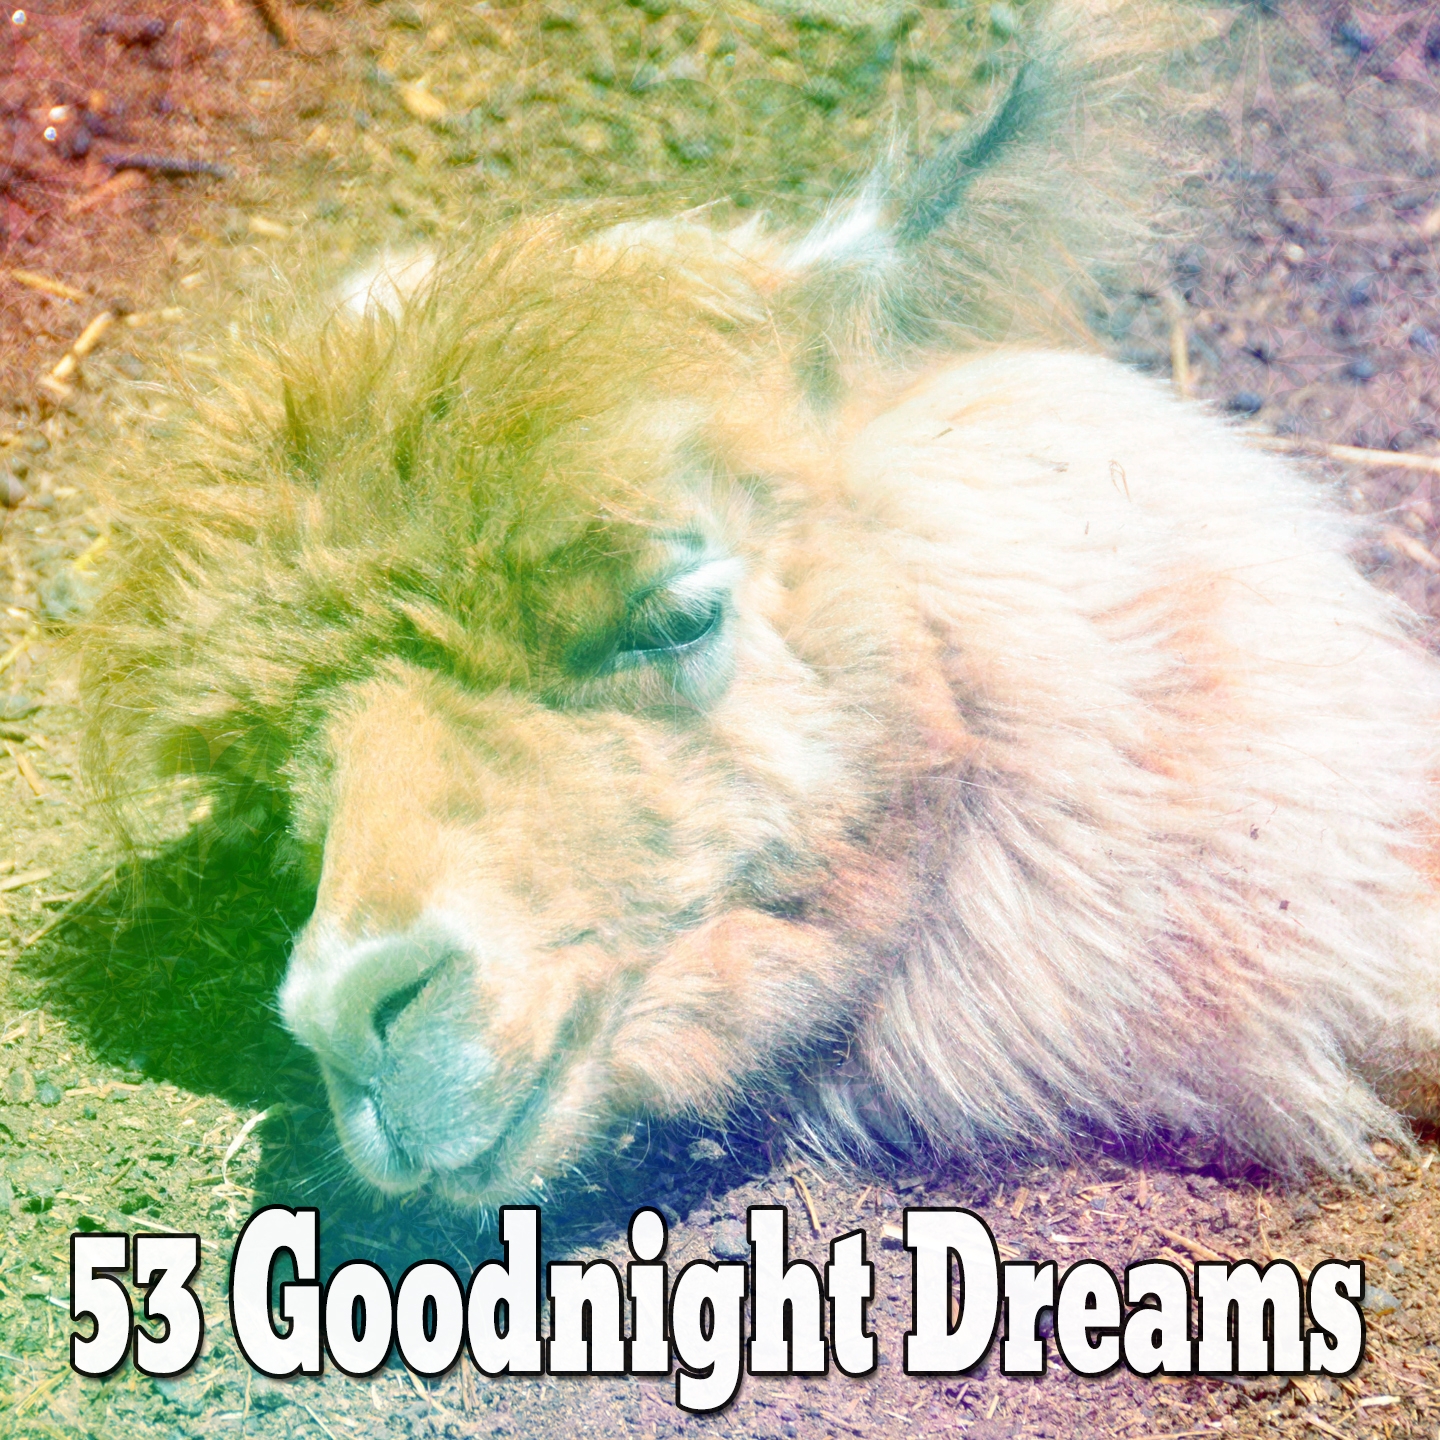 53 Goodnight Dreams